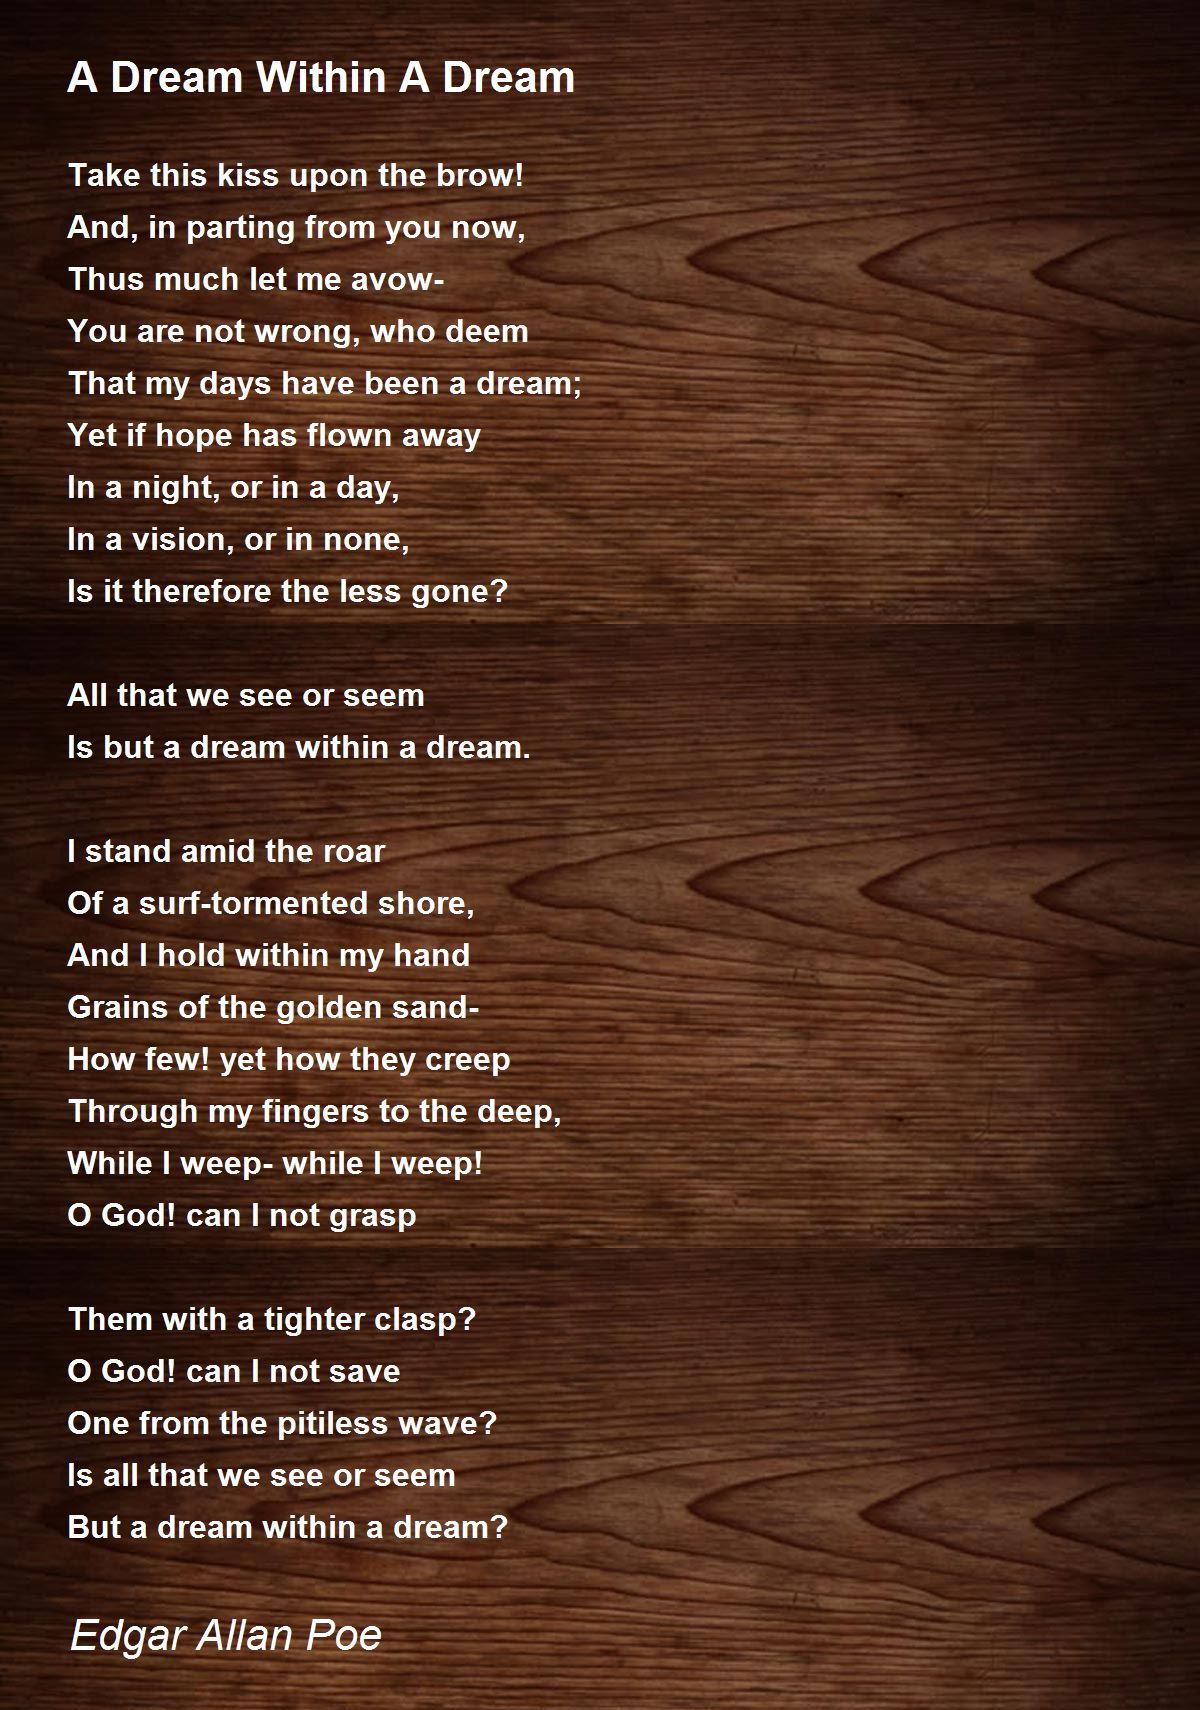 A Dream Within A Dream Poem by Edgar Allan Poe - Poem Hunter